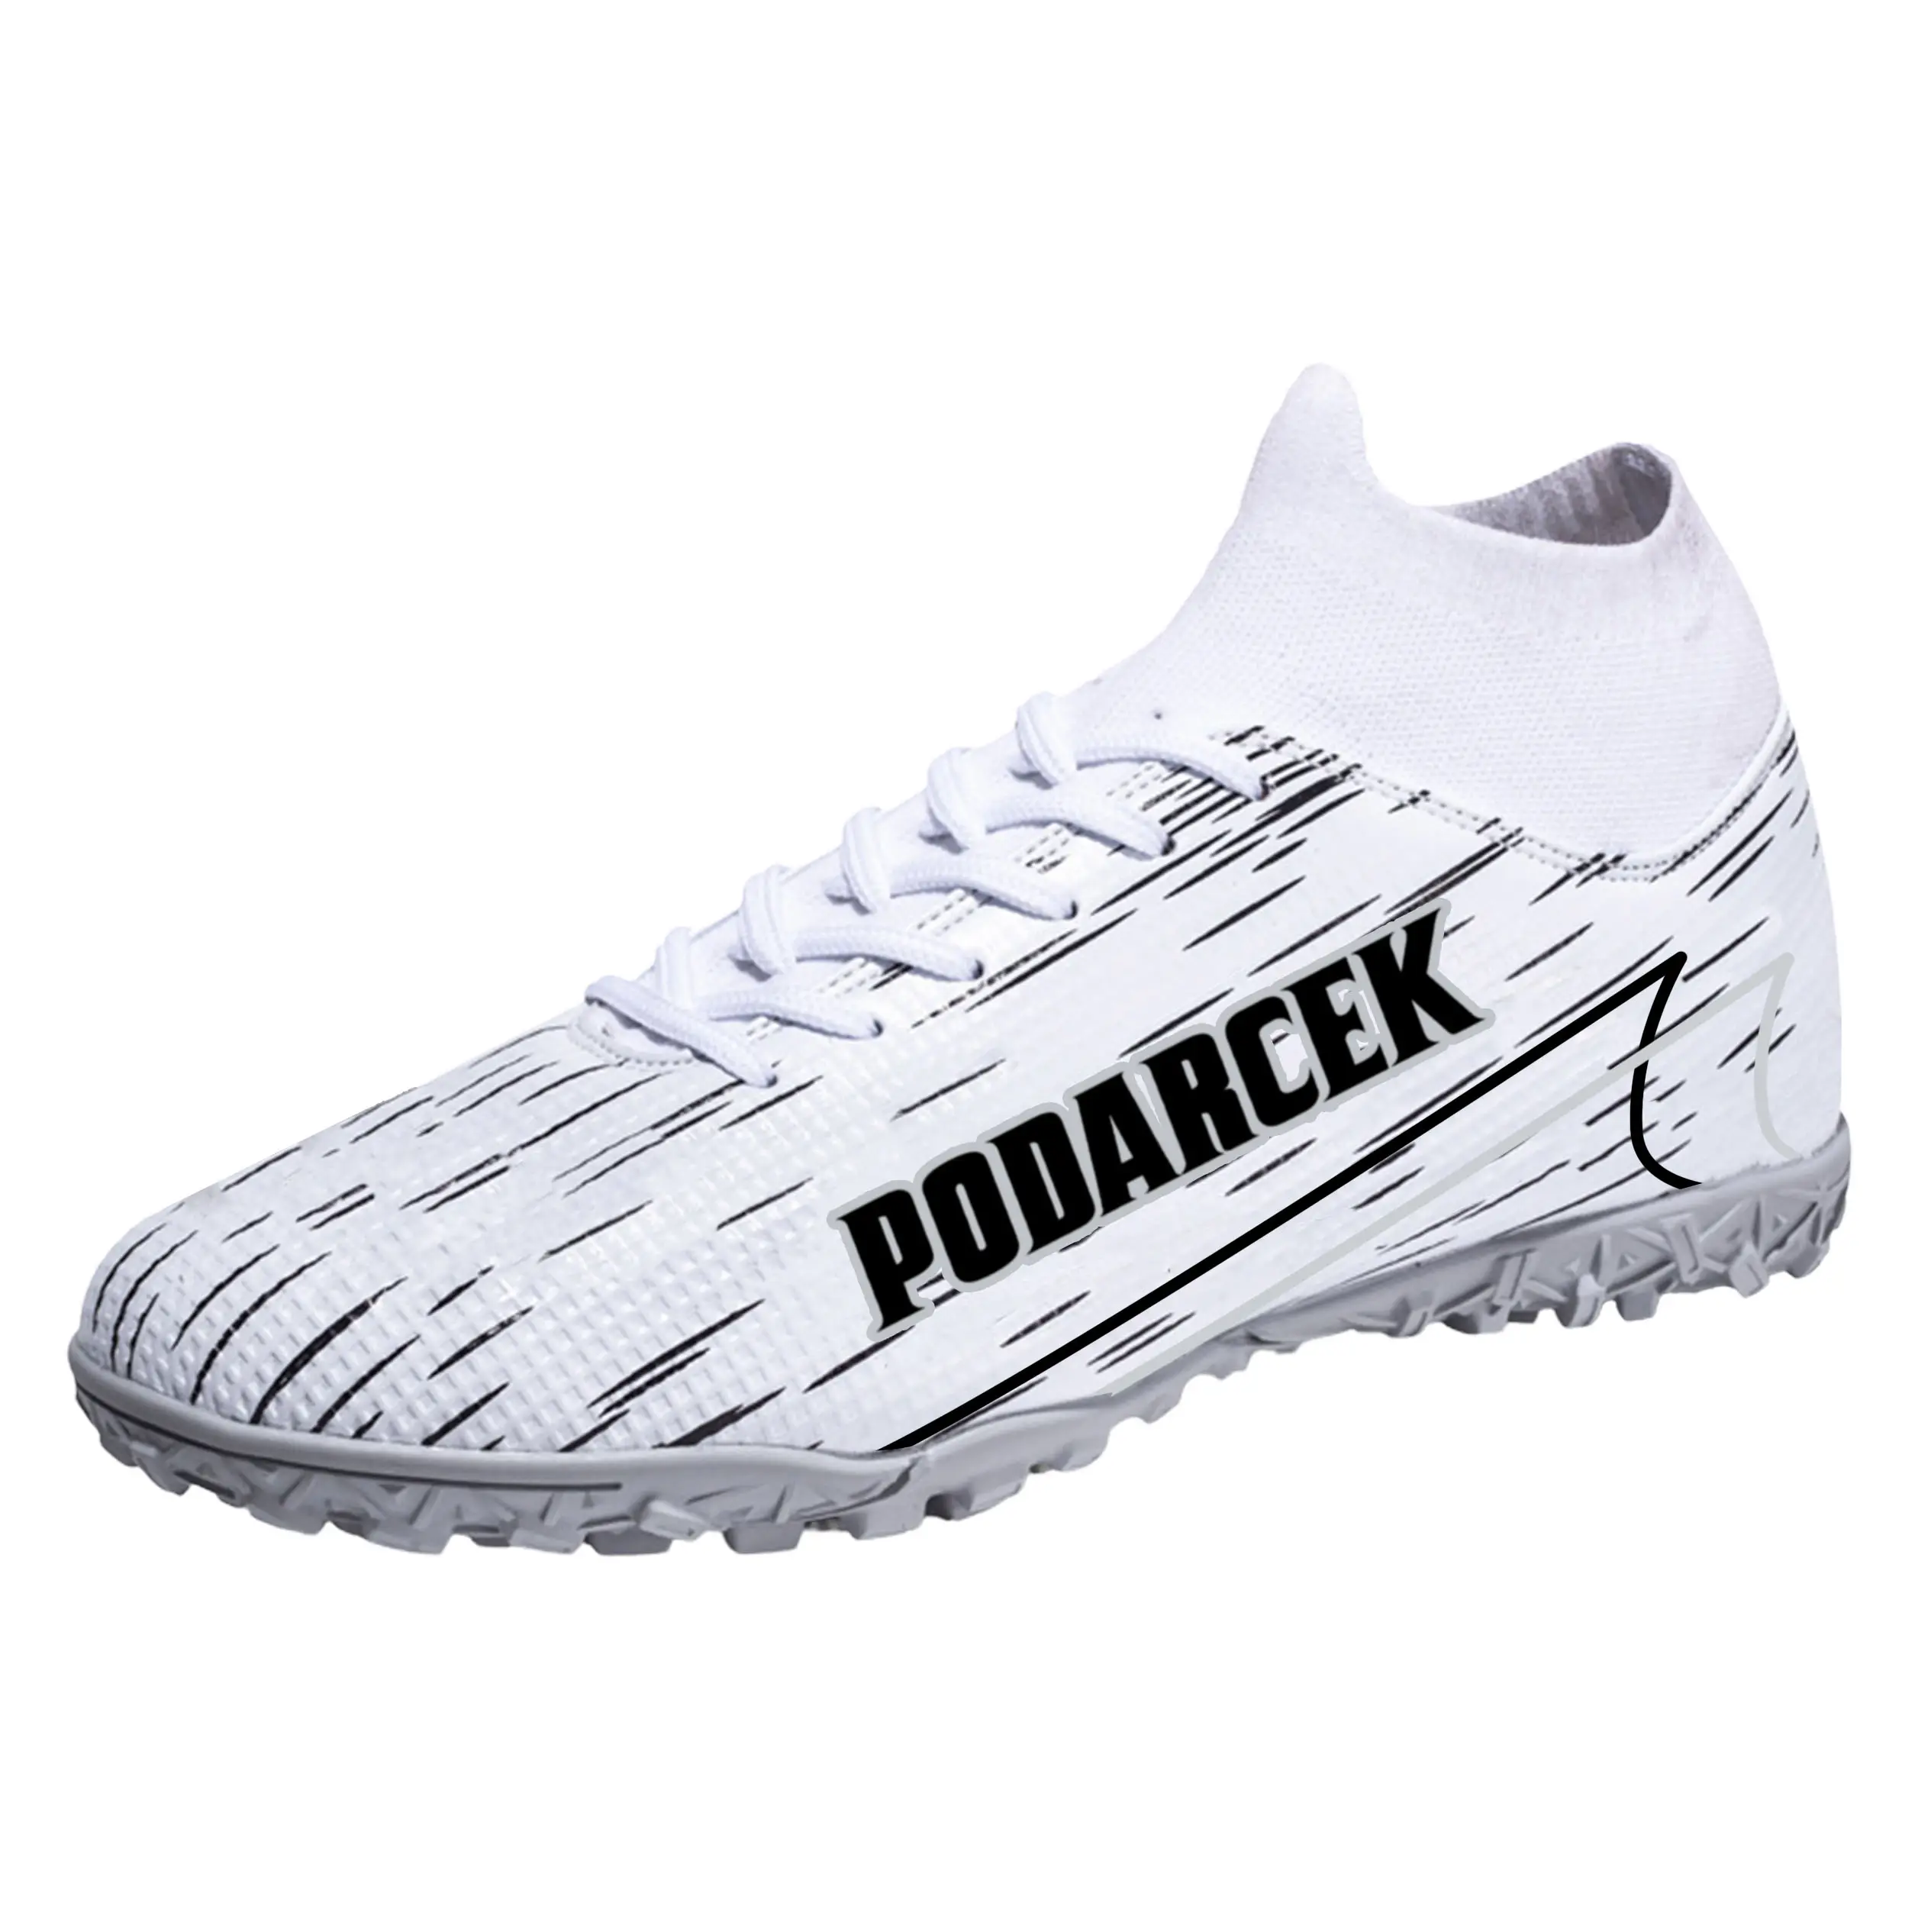 Factory Customize Oem Sale Online Men Kids Cleats Football Boots Guayos Para Futbol Black Soccer Shoes